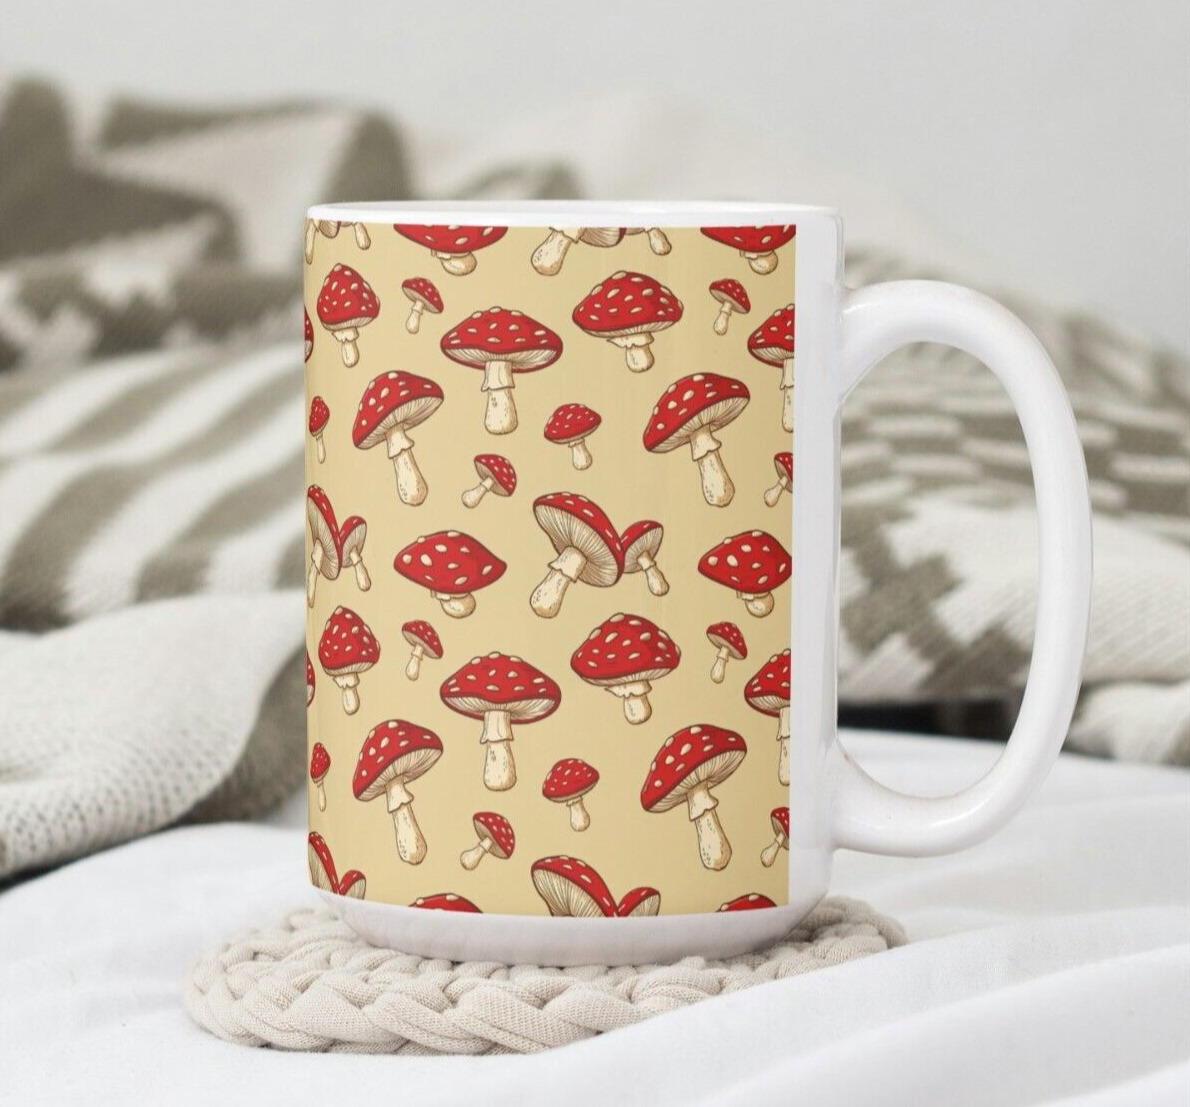 Red Mushrooms Coffee Tea Mug Cup Ceramic 15 Oz Sublimated Gift by Mugzan